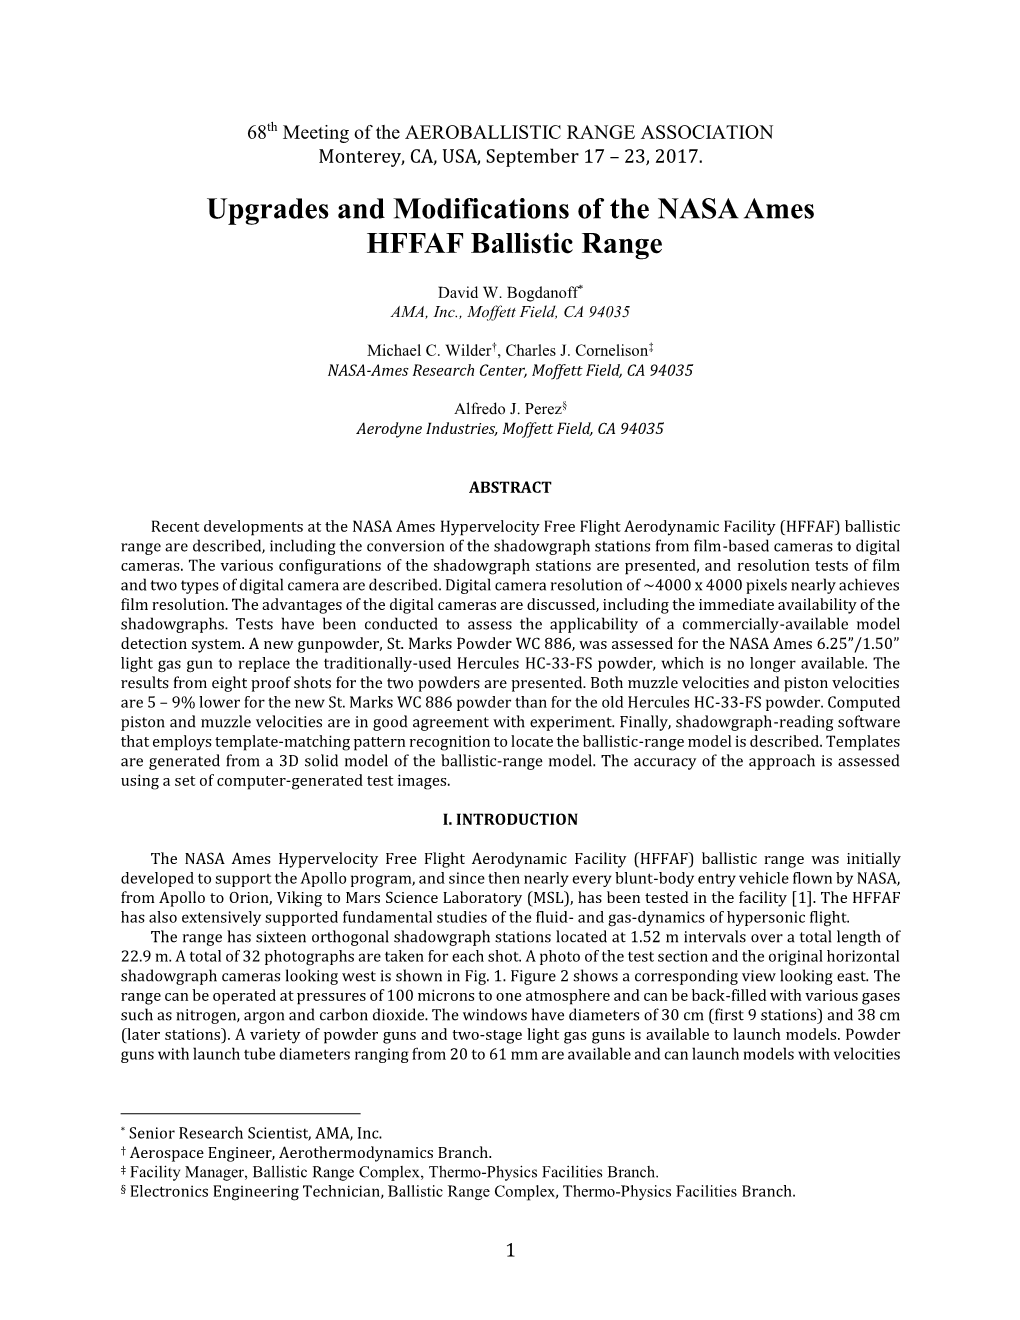 Upgrades and Modifications of the NASA Ames HFFAF Ballistic Range